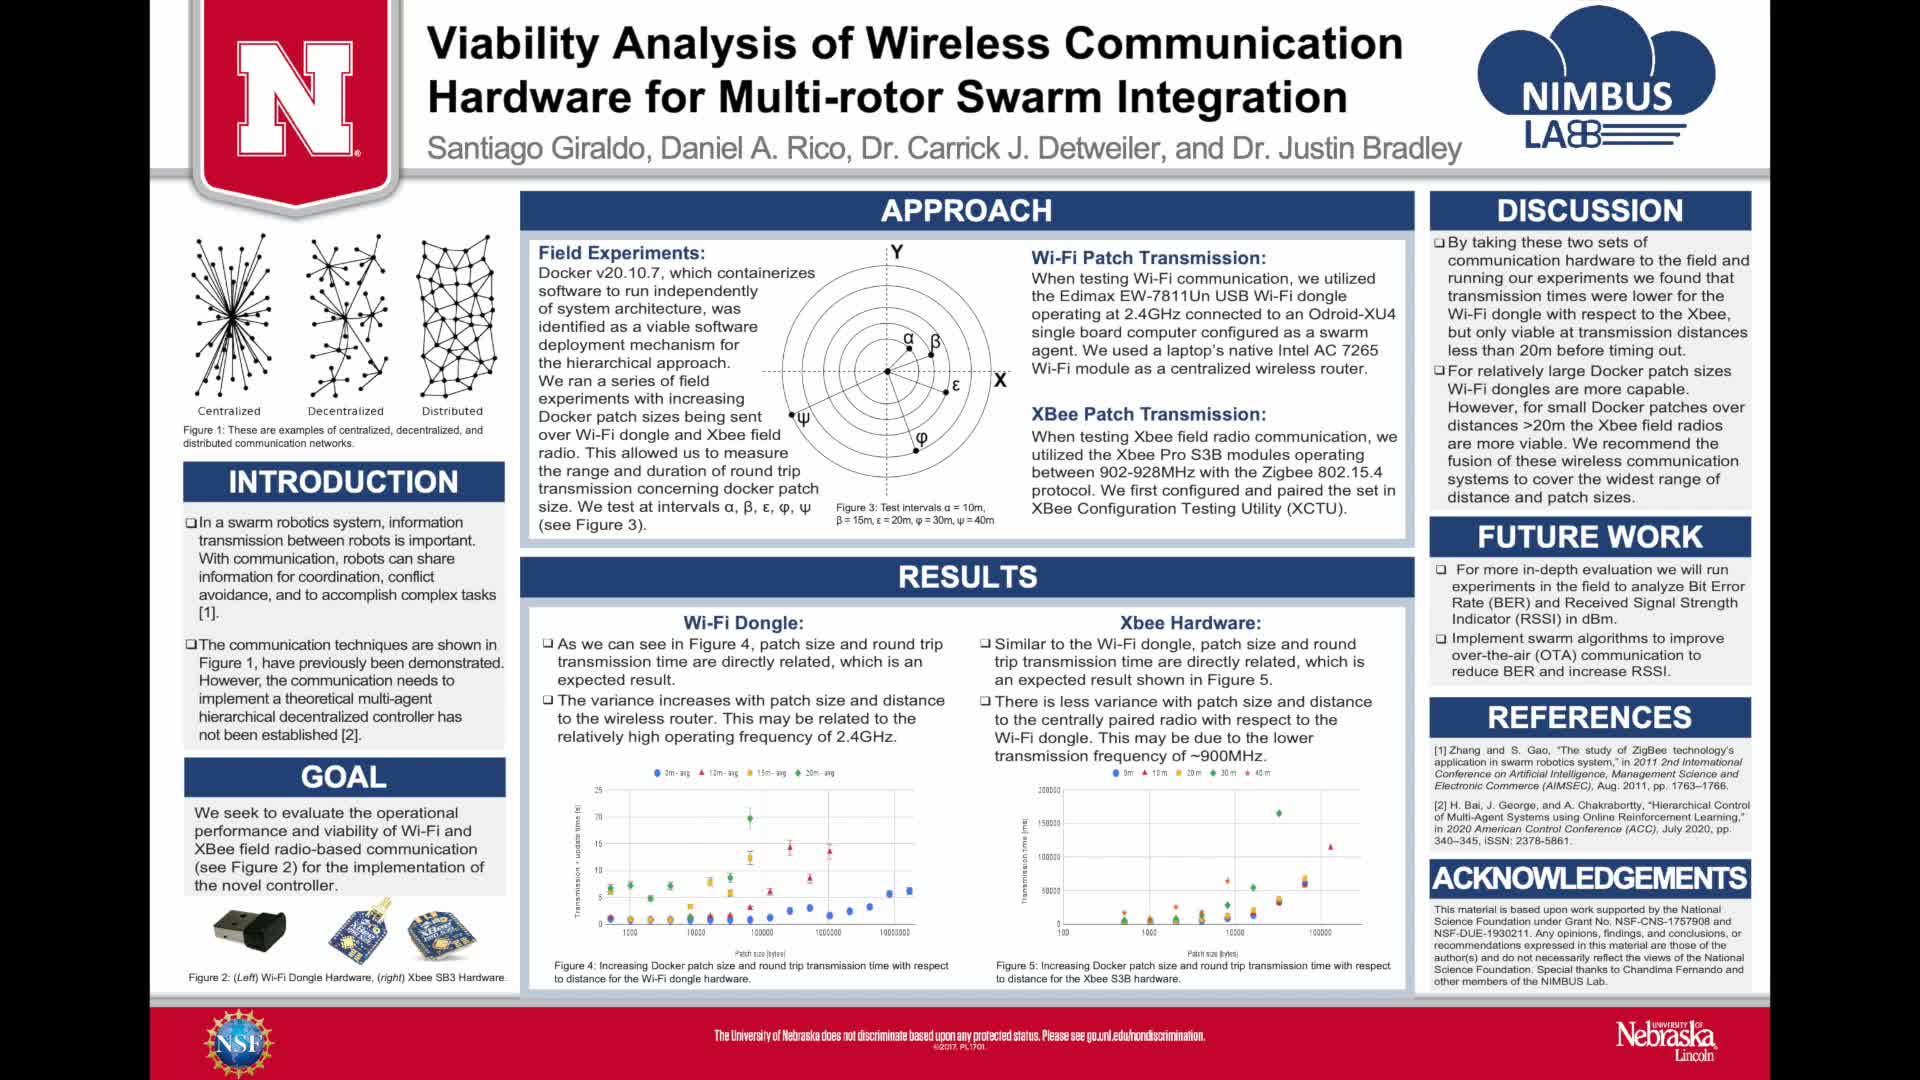 Viability Analysis of Wireless Communication Hardware for Multi-rotor Swarm Integration